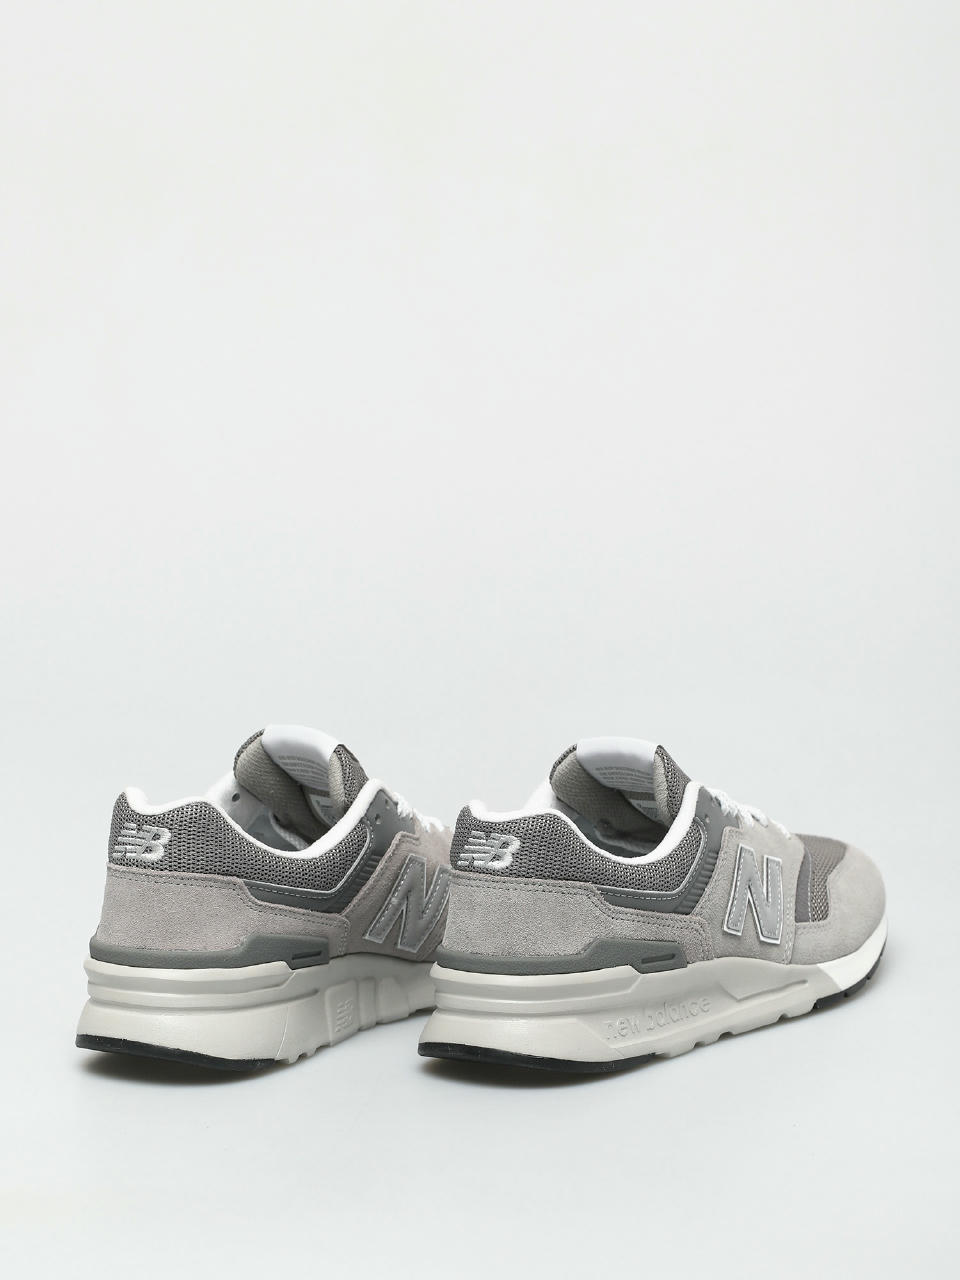 Schurk micro Sympton New Balance 997 Shoes (marblehead)